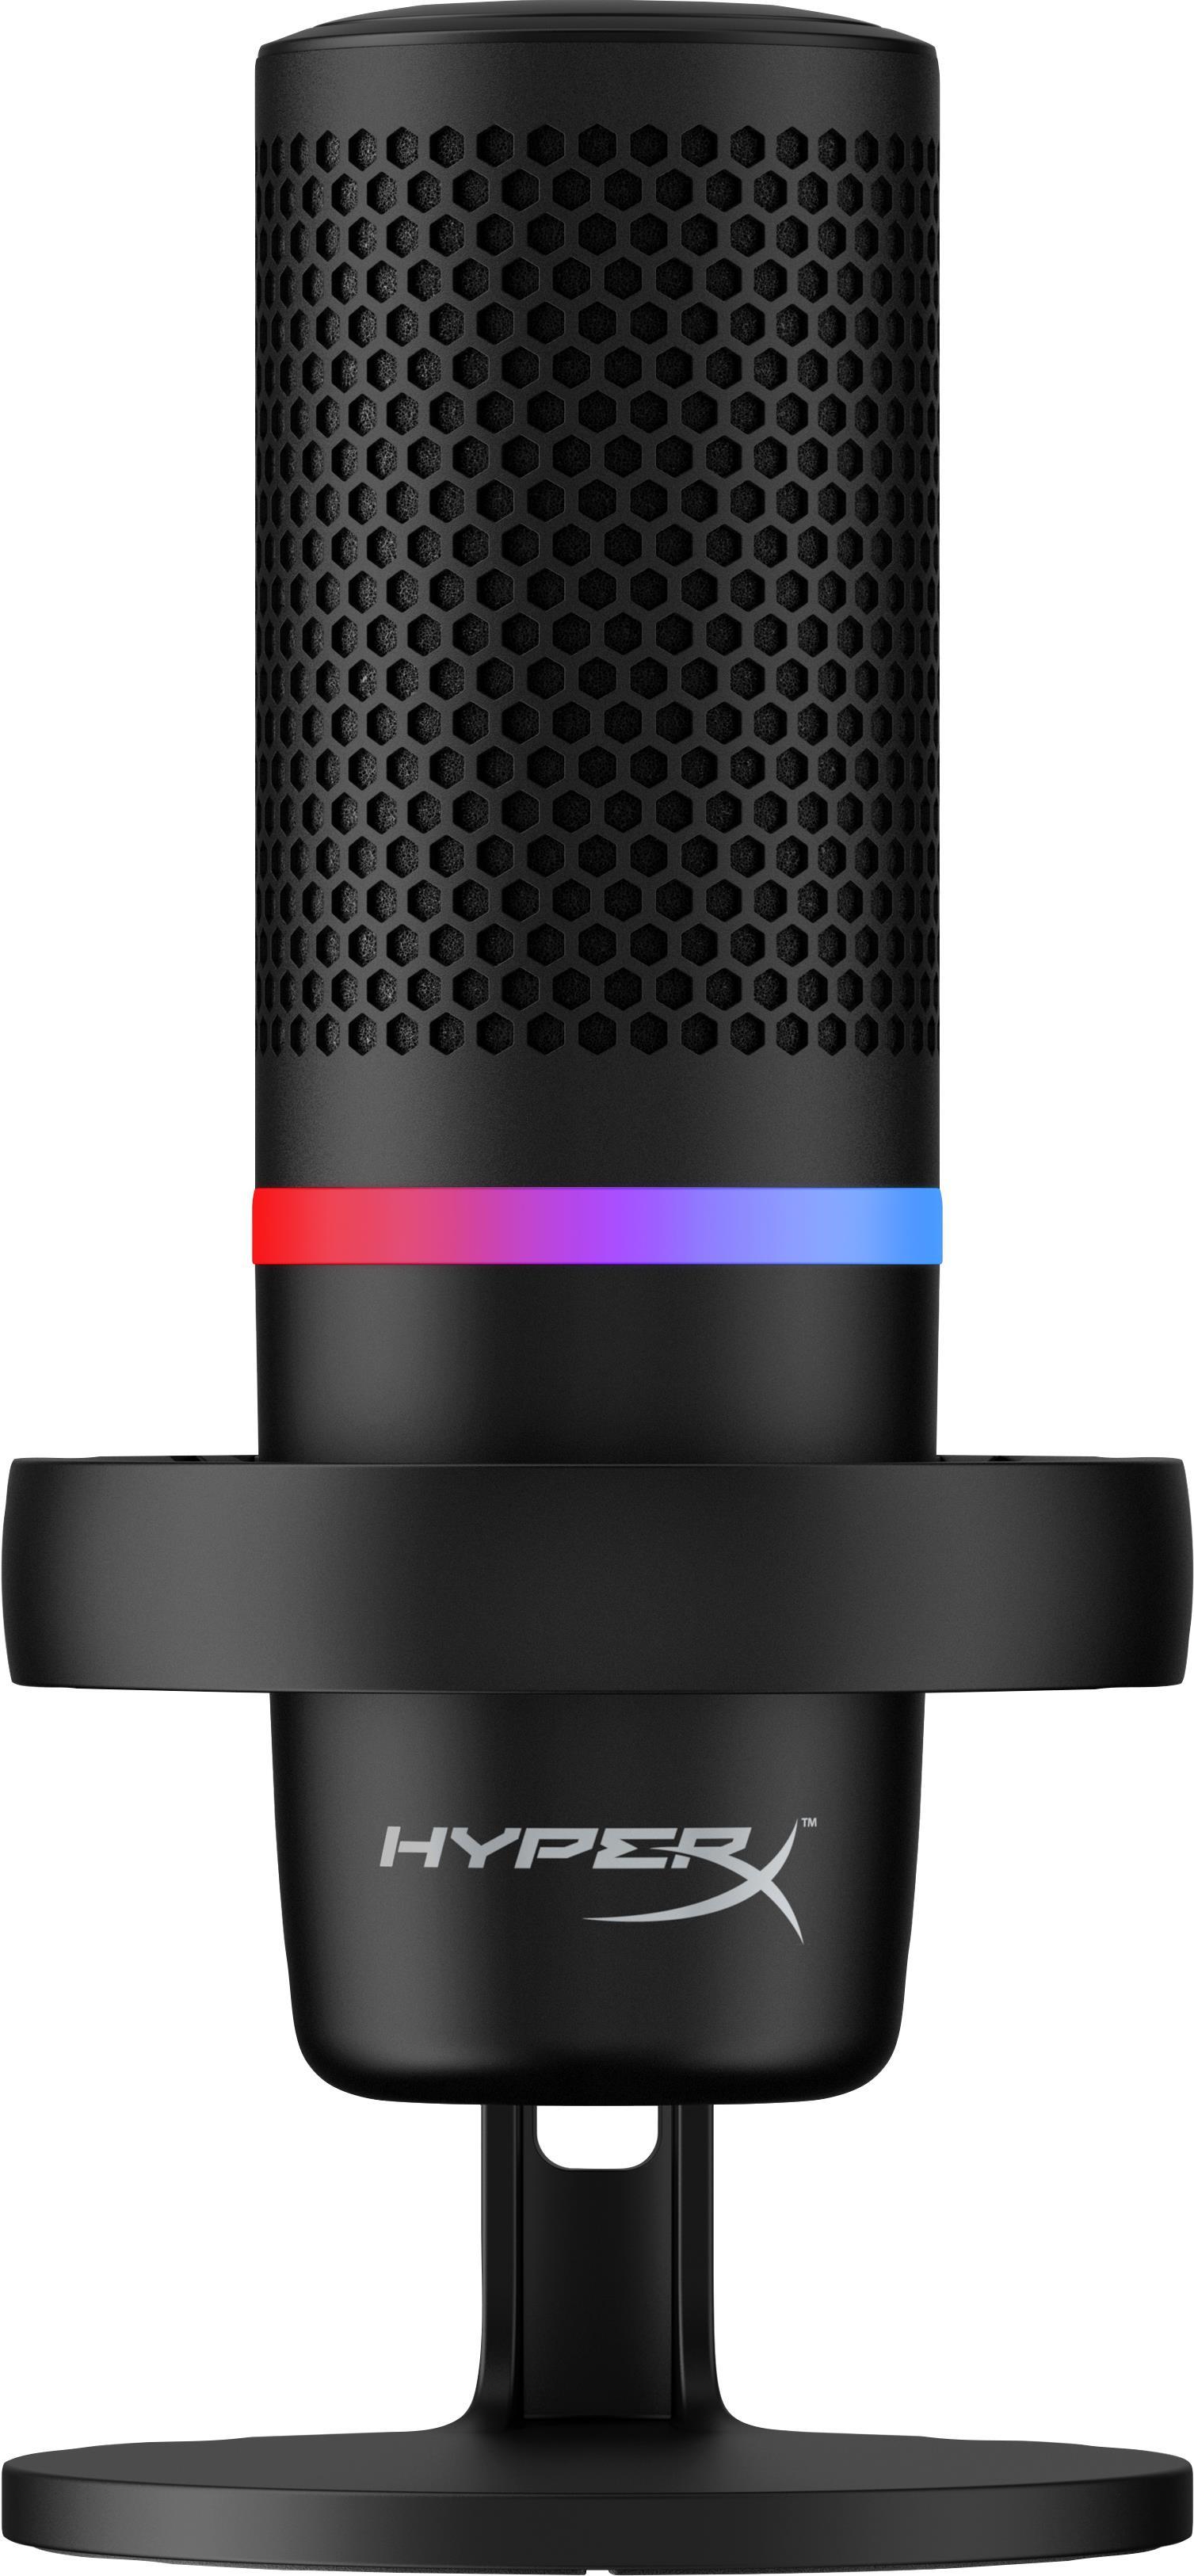 HyperX DuoCast - RGB USB Kondensatormikrofon, schwarz Für PC, PS5, PS4, Mac. Low-Profile-Shock Mount, Cardioid, Omnidirektional, Pop-Filter, Gain-Control, Gaming, Streaming, Podcasts, Twitch, YouTube, Discord (4P5E2AA)